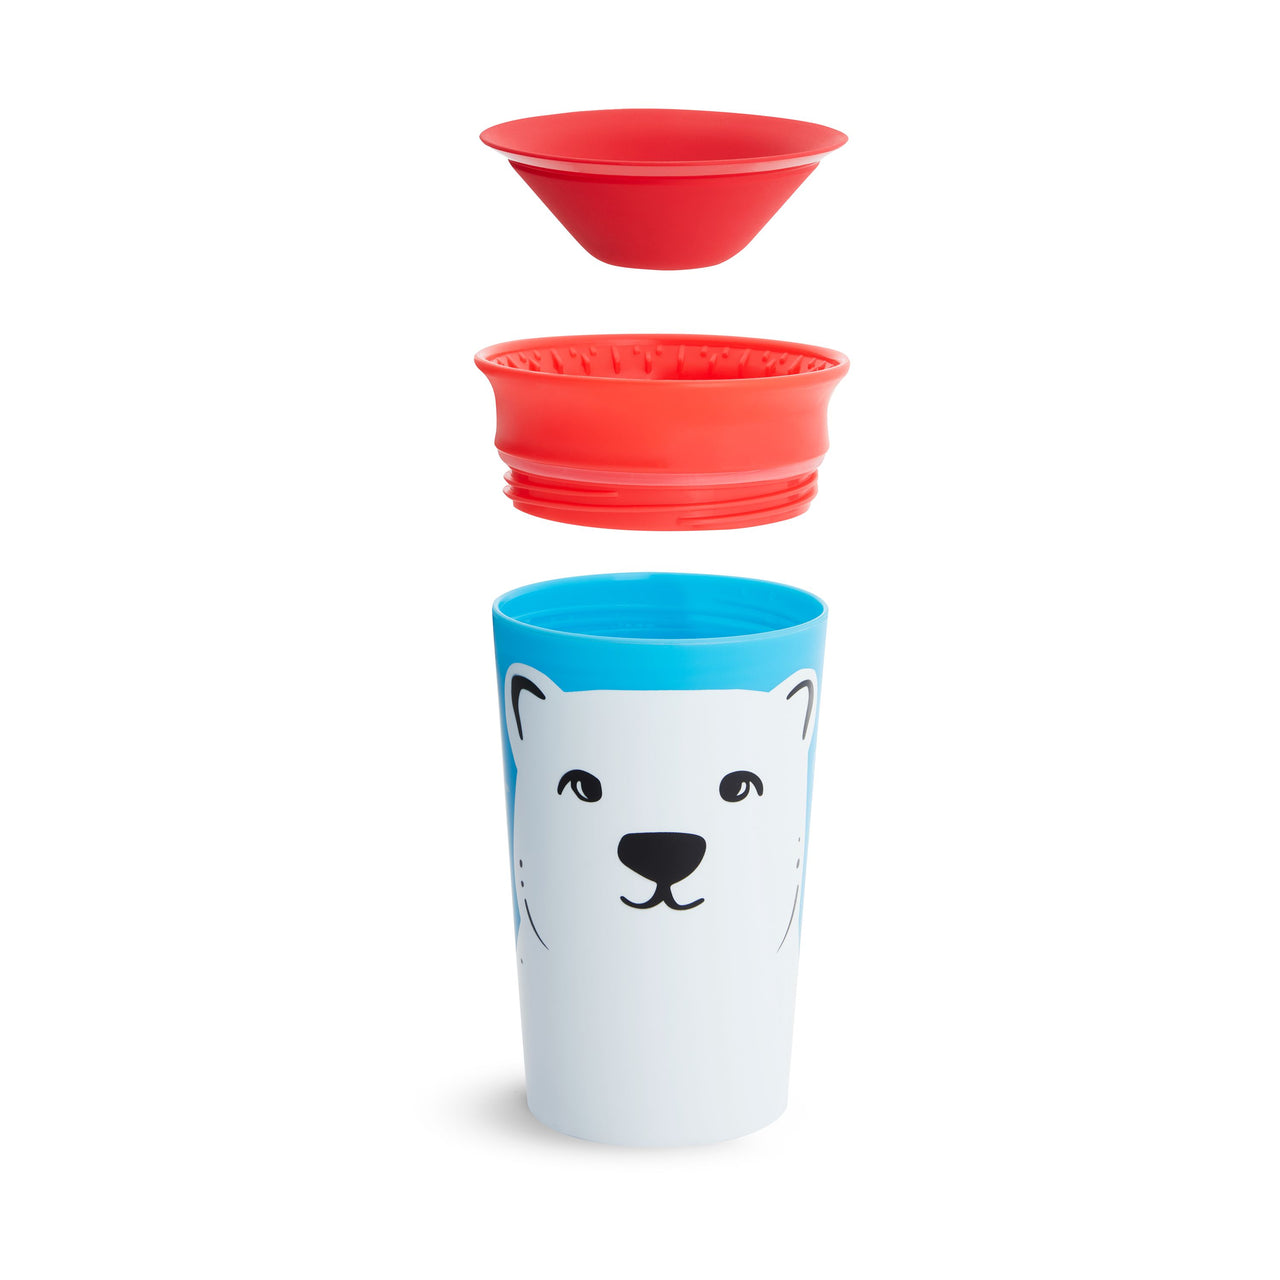 Munchkin Miracle 360 Sippy Cup- Wild Love Polar Bear